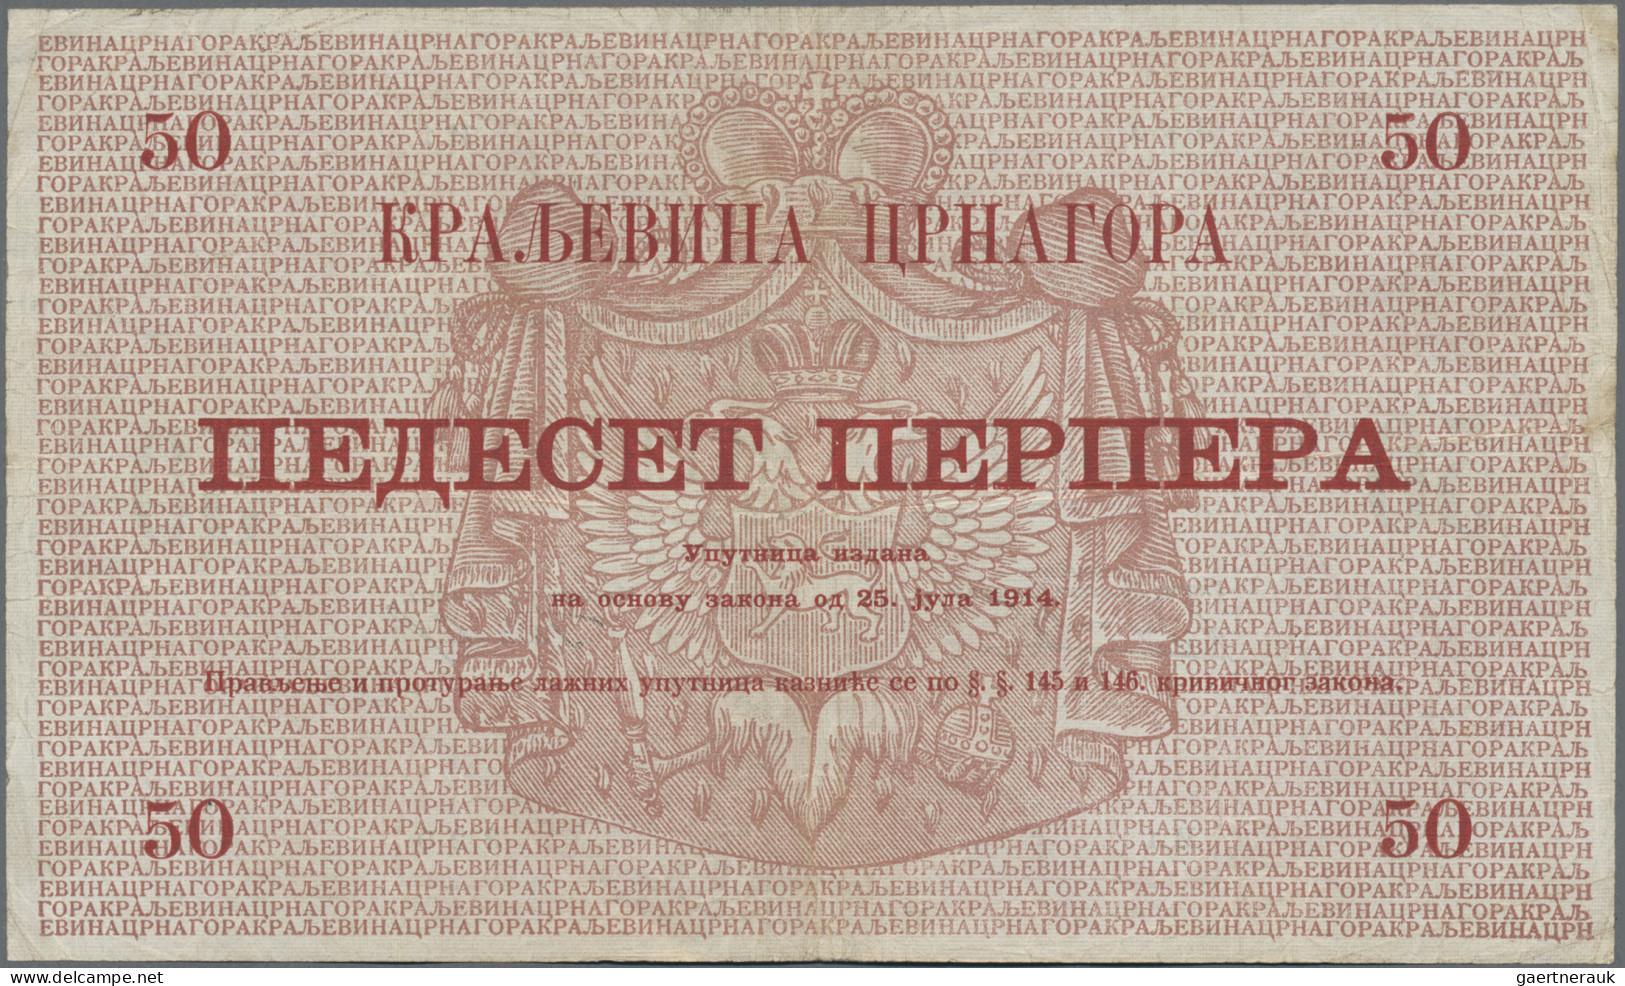 Montenegro: Kingdom of Montenegro – Royal Government, set with 10 Perpera 1914 (